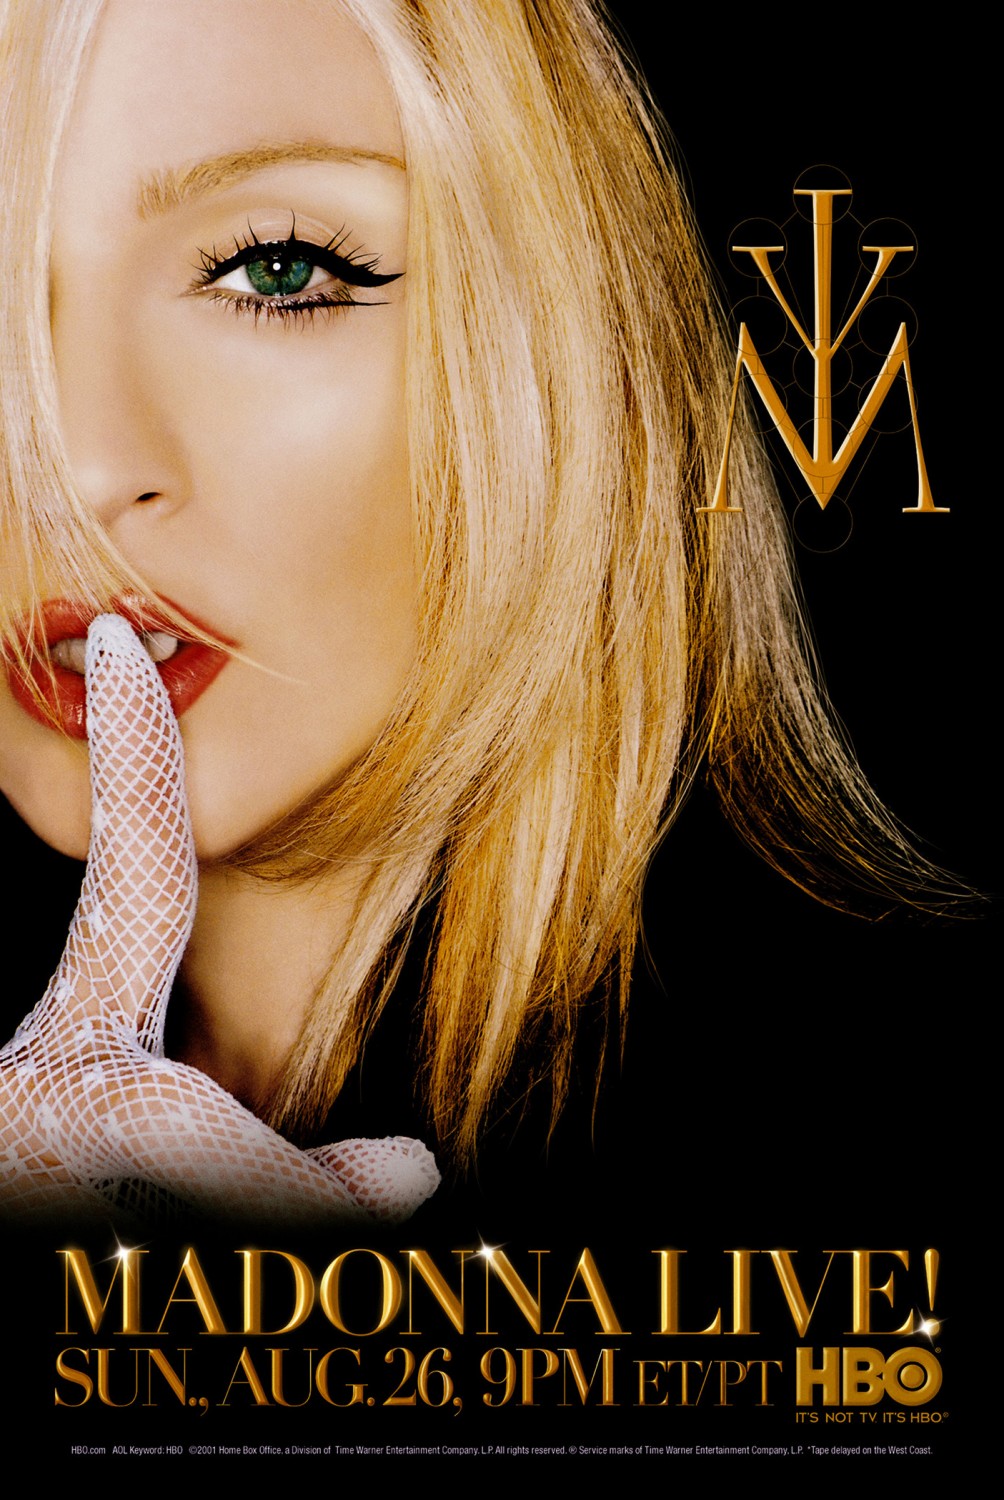 Extra Large TV Poster Image for Madonna Live! 